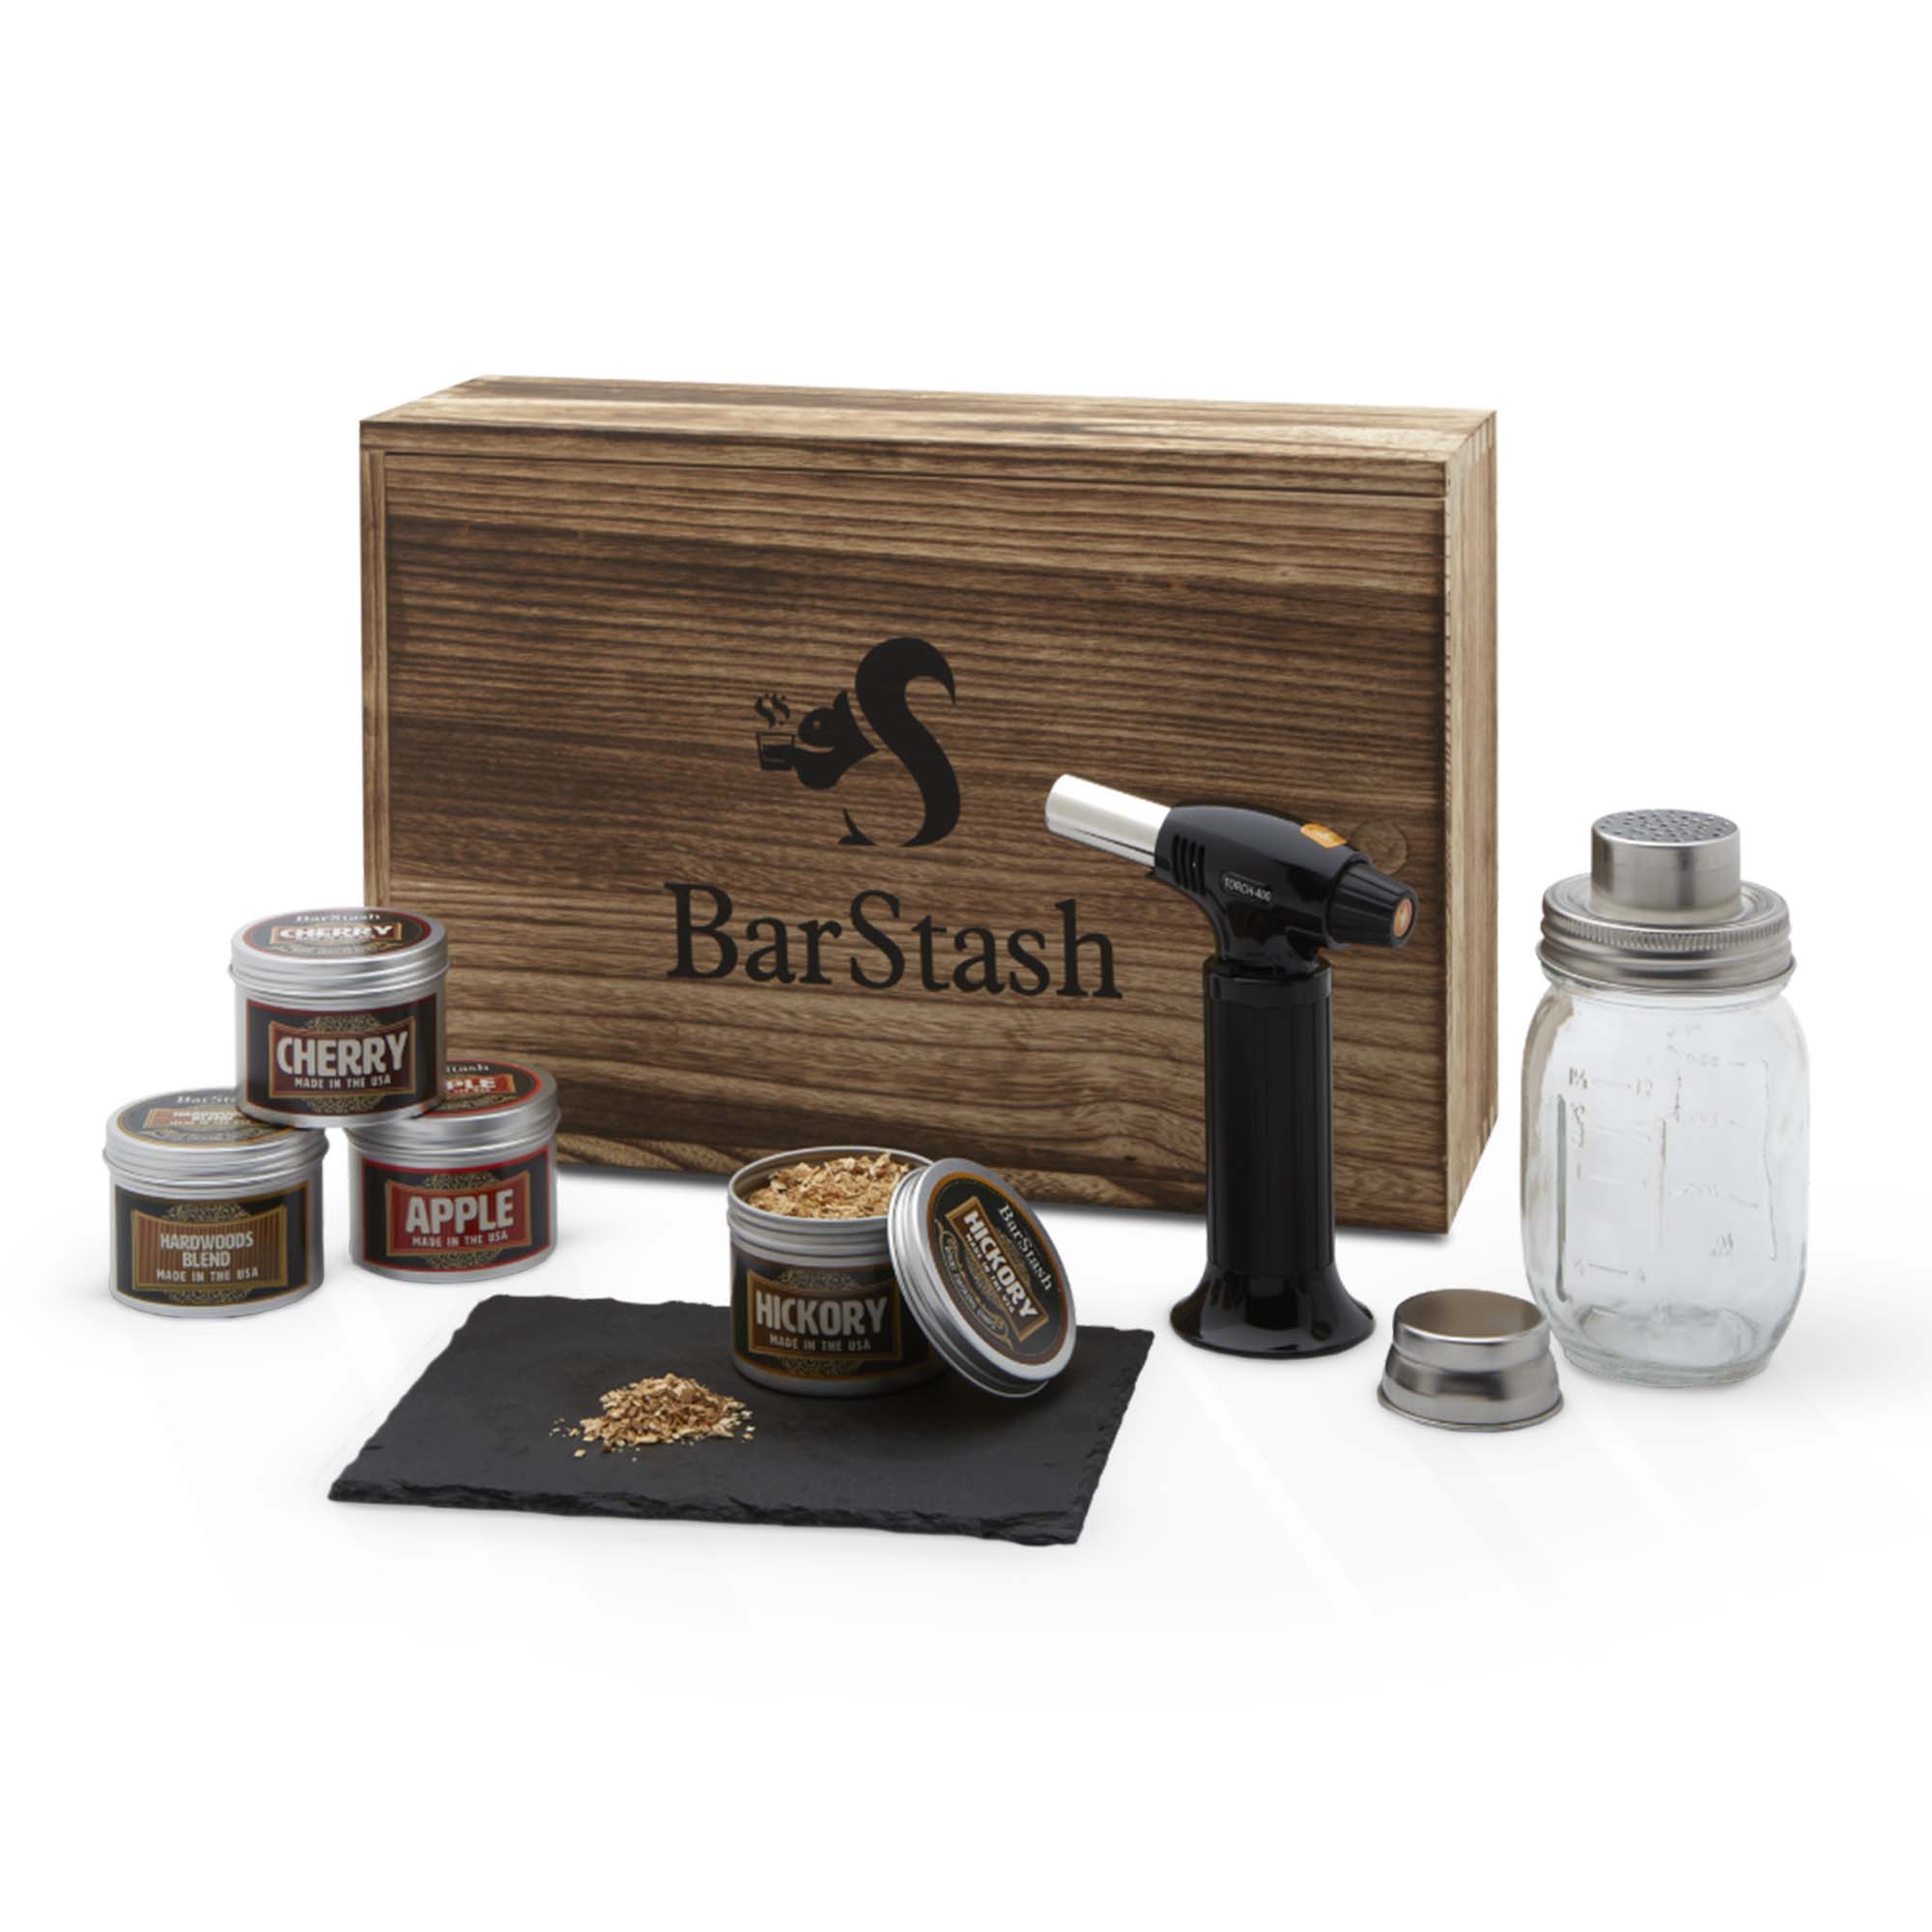 BarStash Cocktail Smoker Kit - Drink Smoker Bartender Kit for Smoking Cocktails